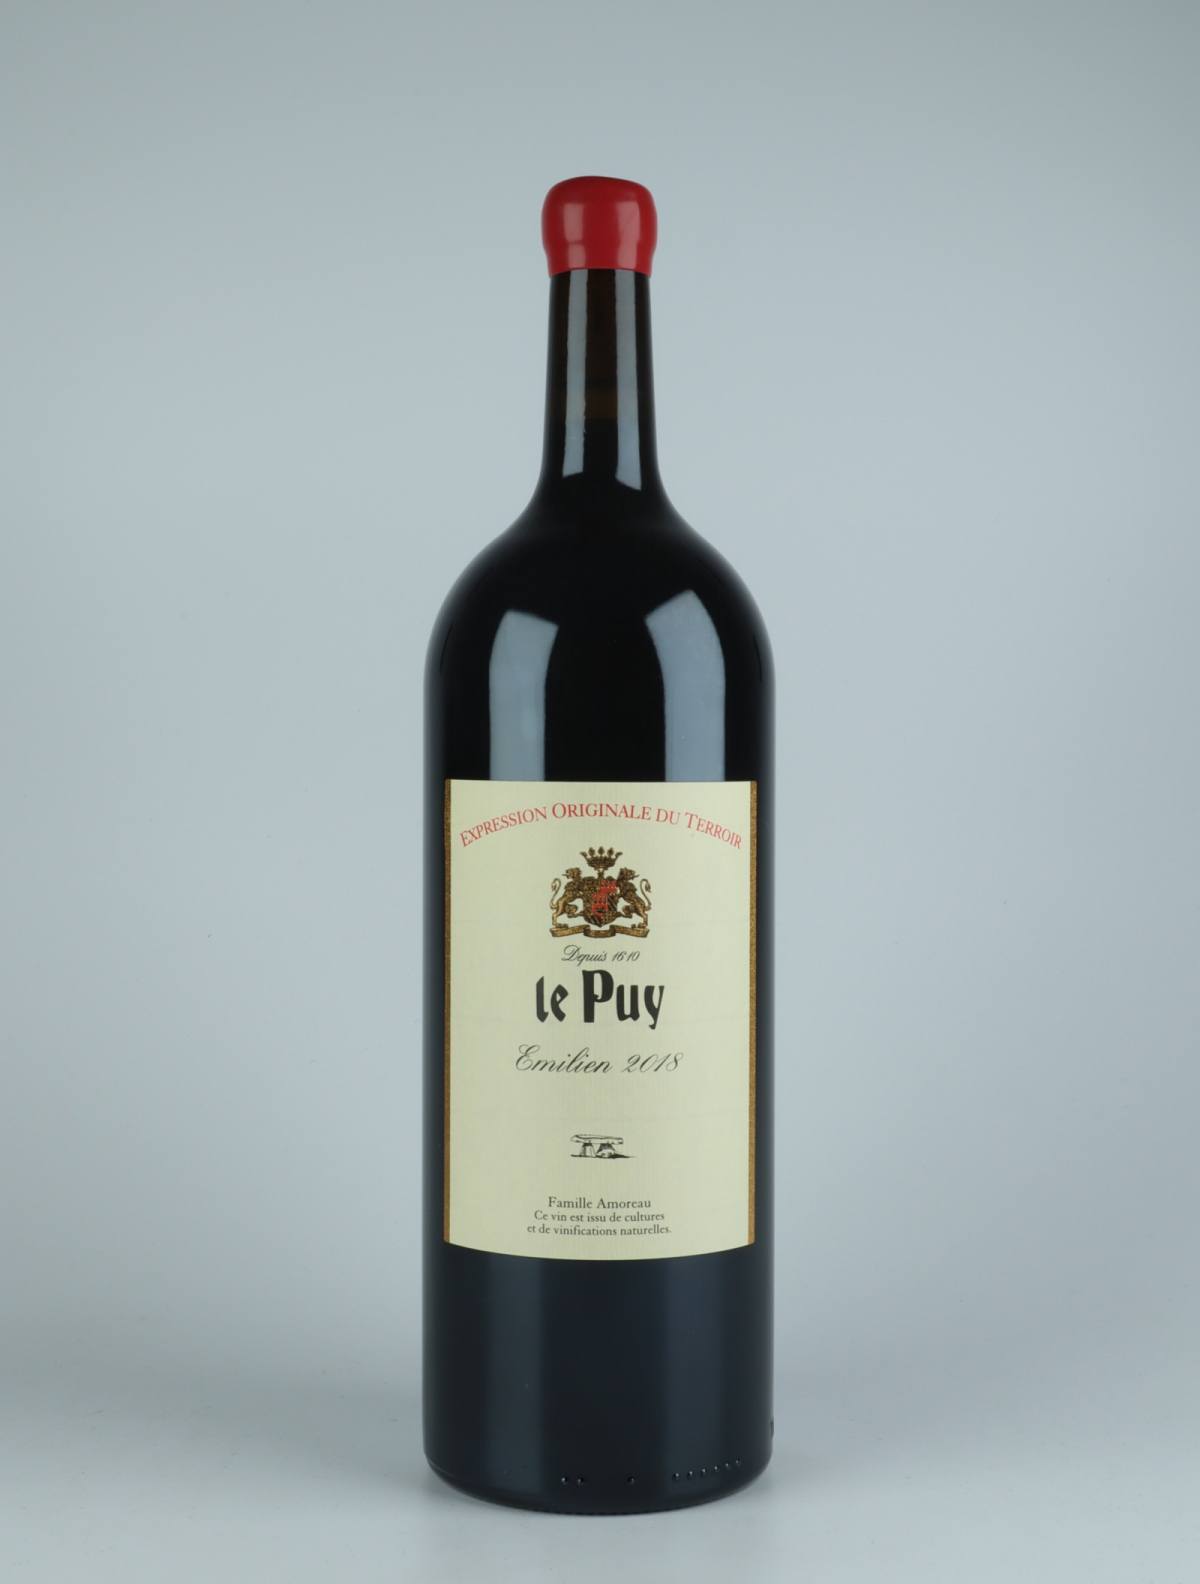 A bottle 2018 Emilien Red wine from Château le Puy, Bordeaux in France